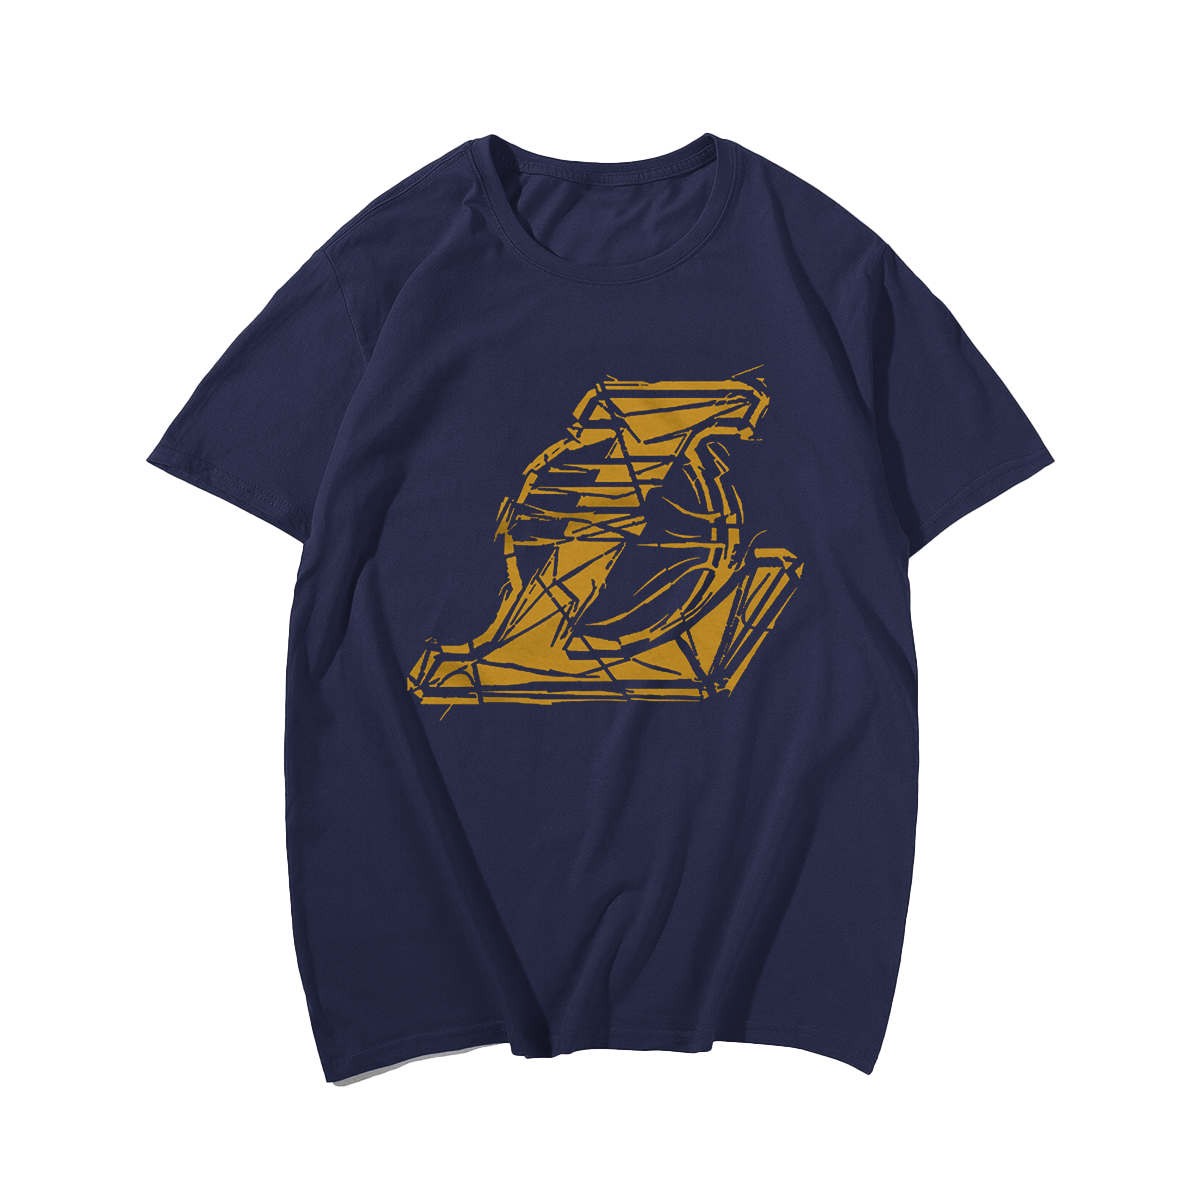 Original Hand-Painted Lakers Cotton T-Shirt, Creative Men Plus Size Oversize T-shirt for Big & Tall Man